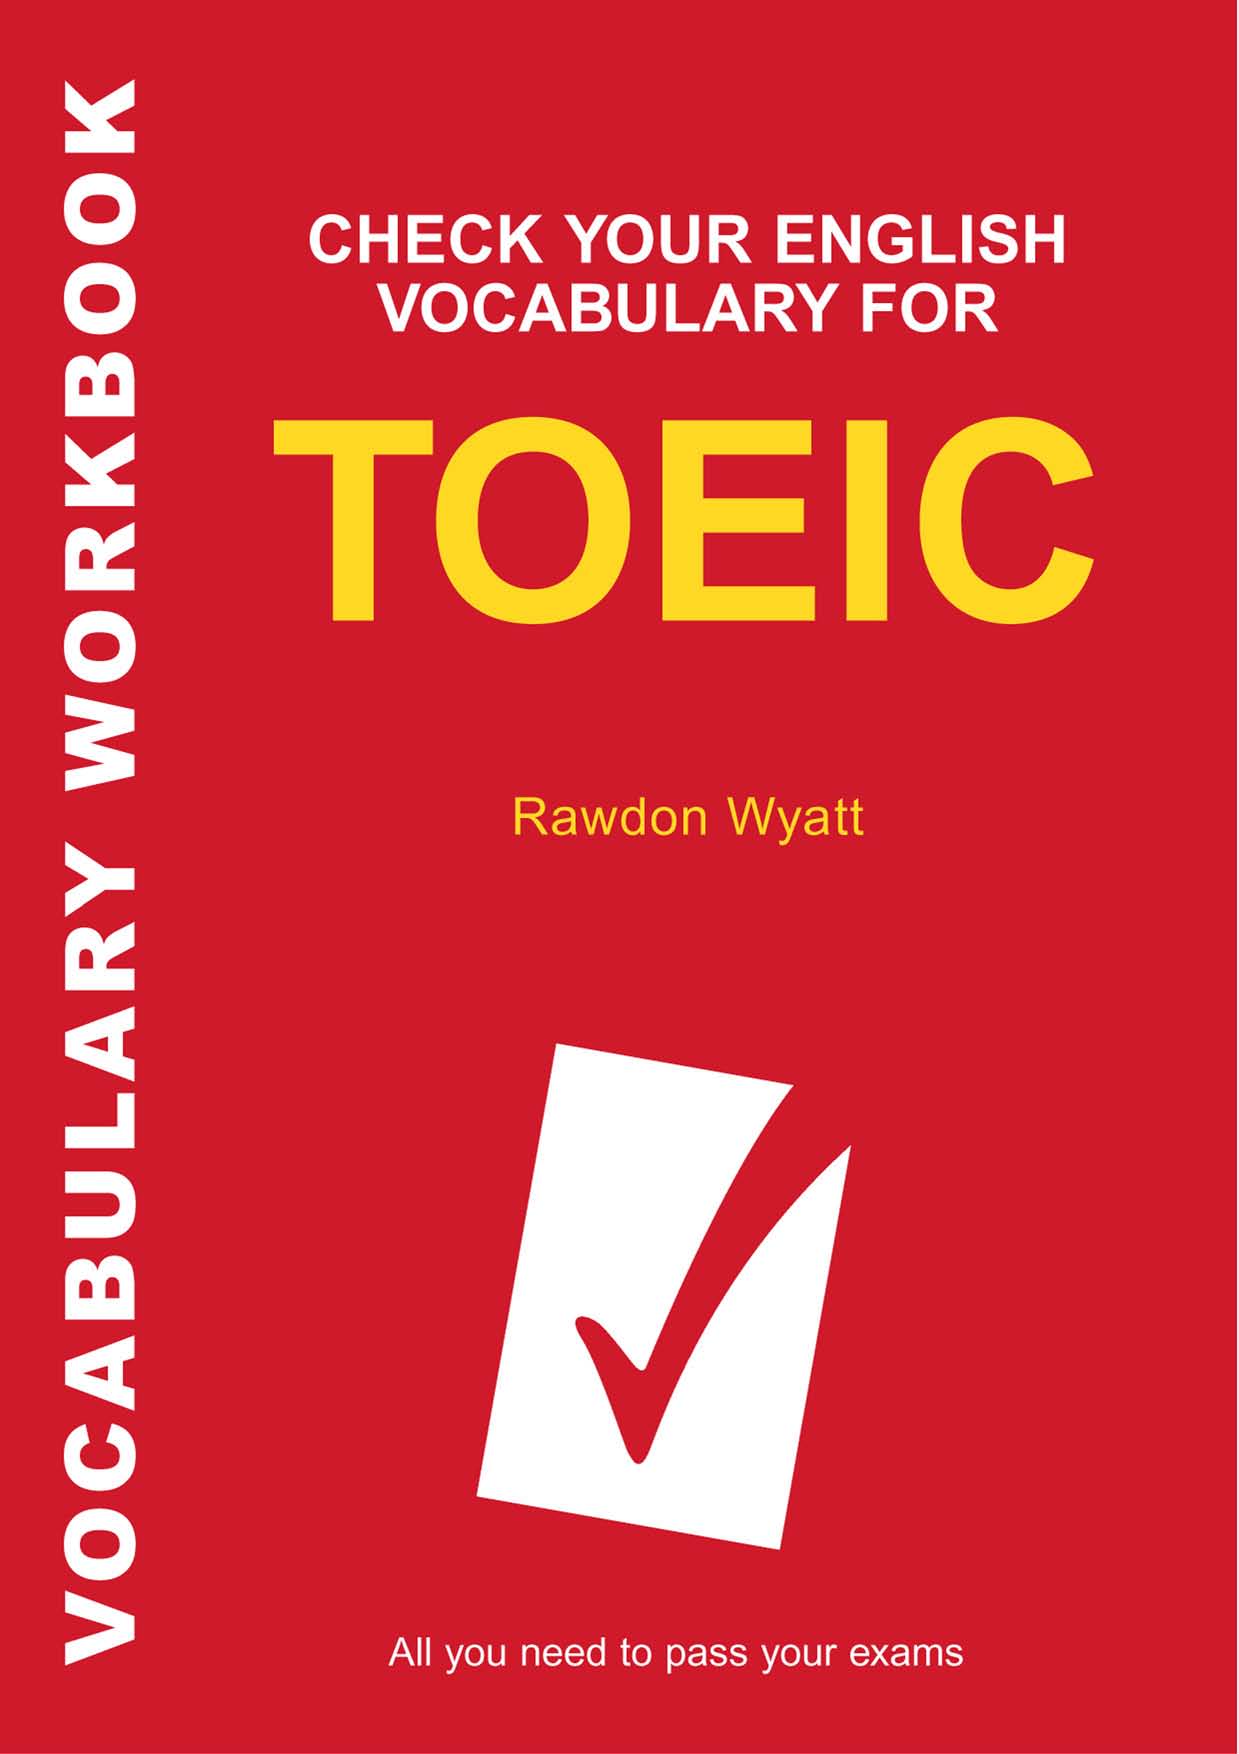 Check your English vocabulary for TOEIC by Rawdon Wyatt